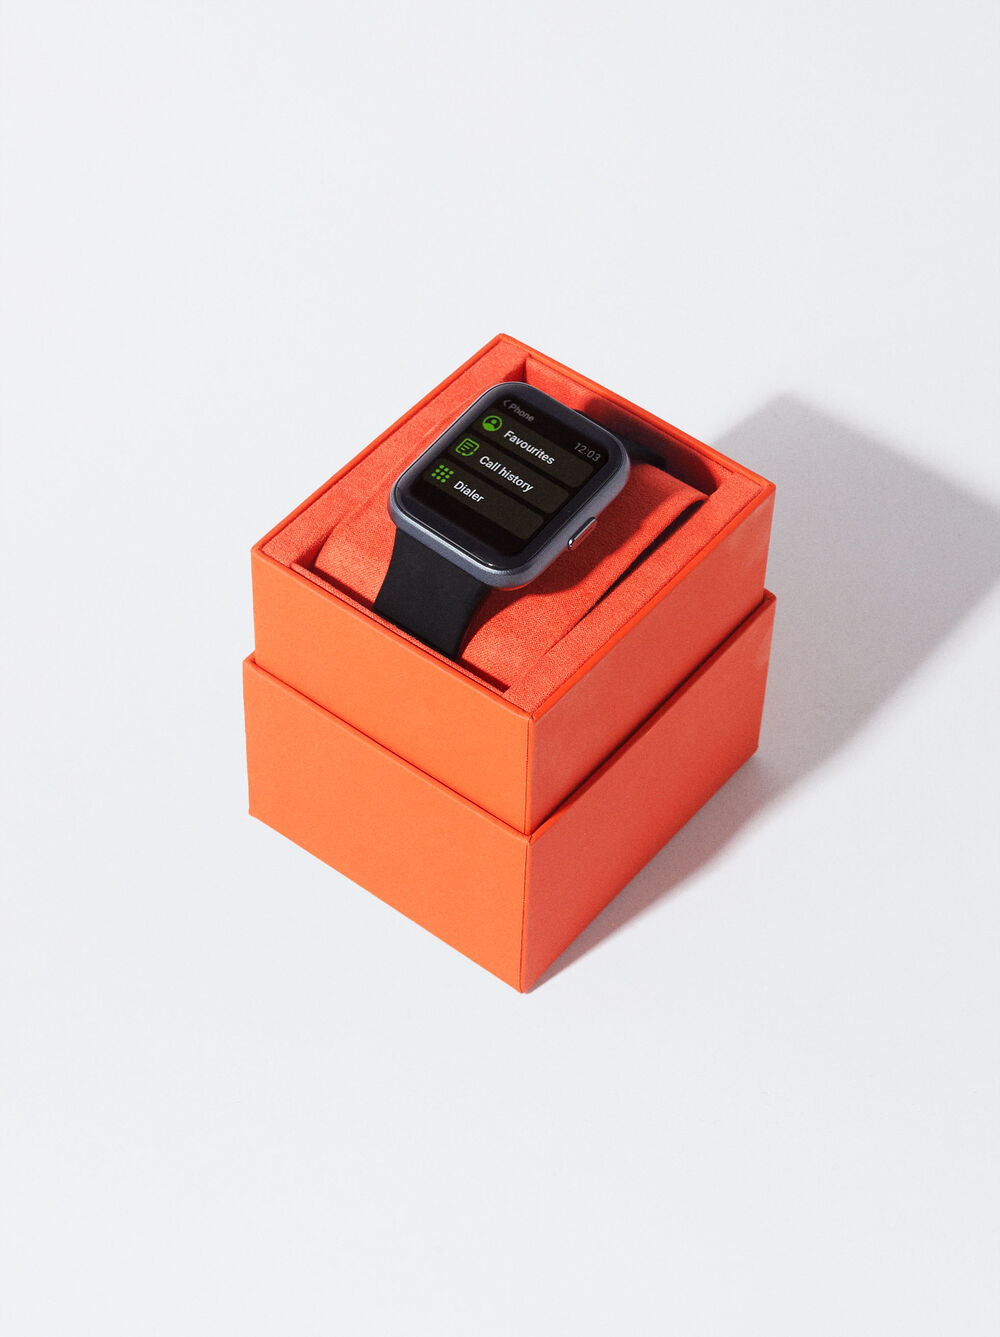 Smartwatch Avec Bracelet En Silicone